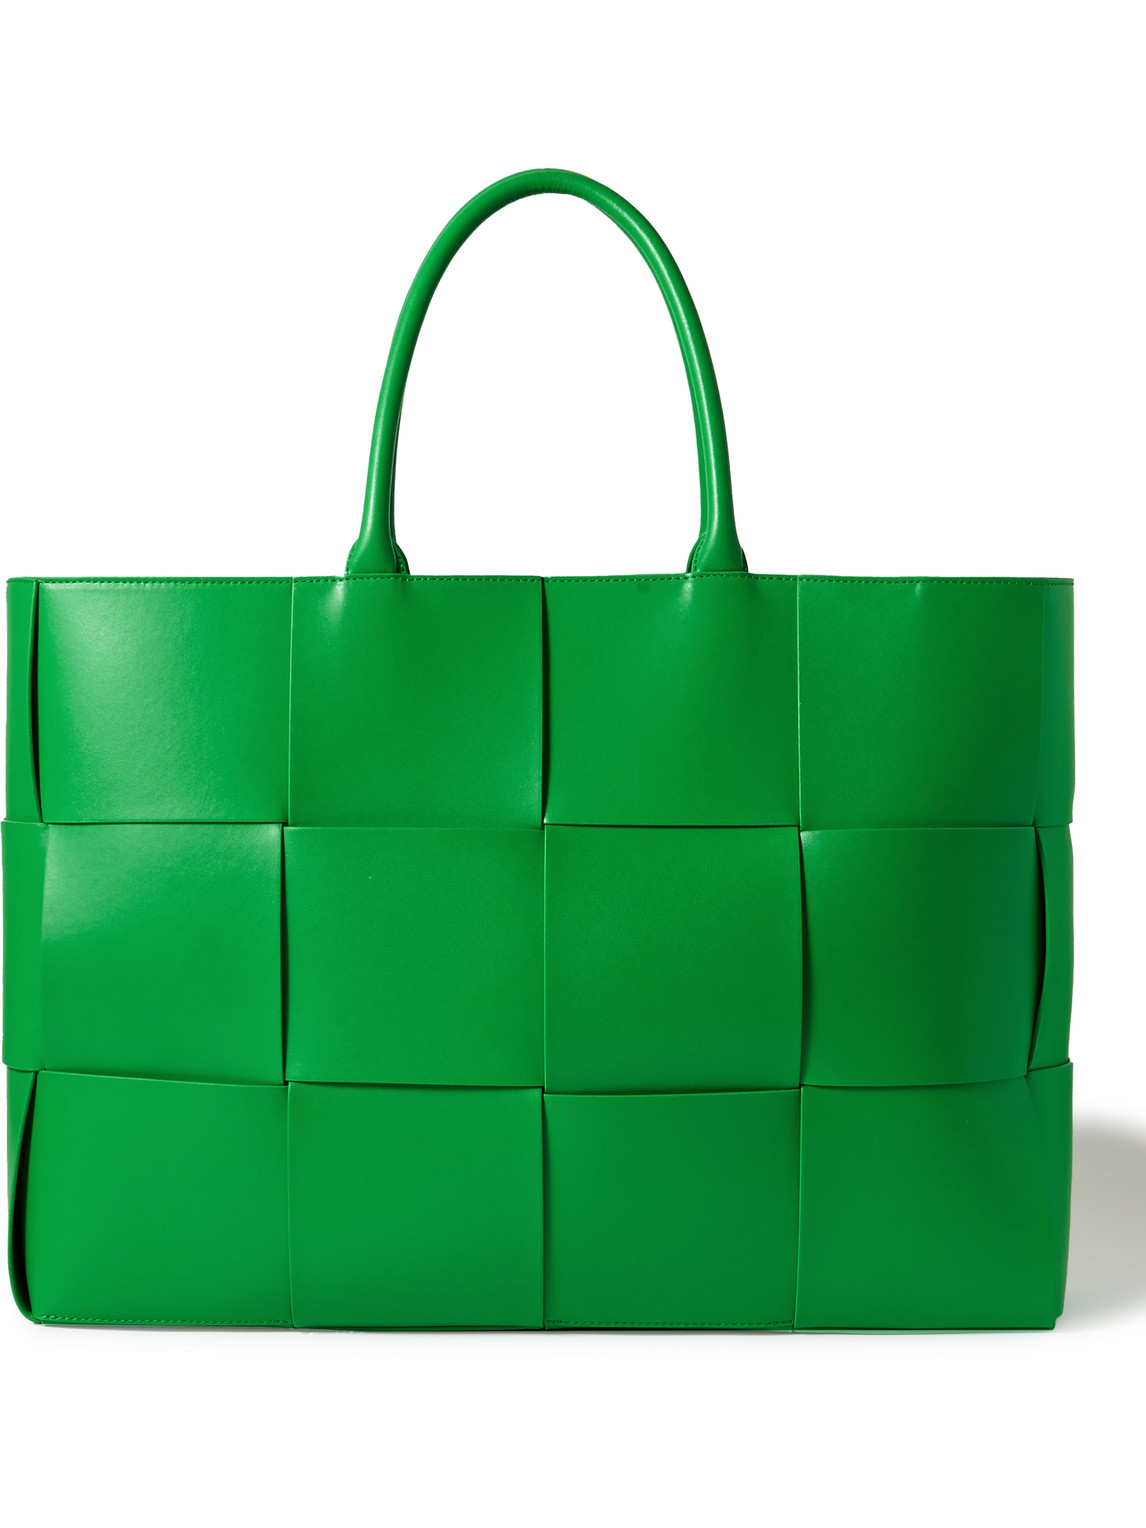 Bottega Veneta - East/West Large Intrecciato Leather Tote Bag - Men - Green von Bottega Veneta